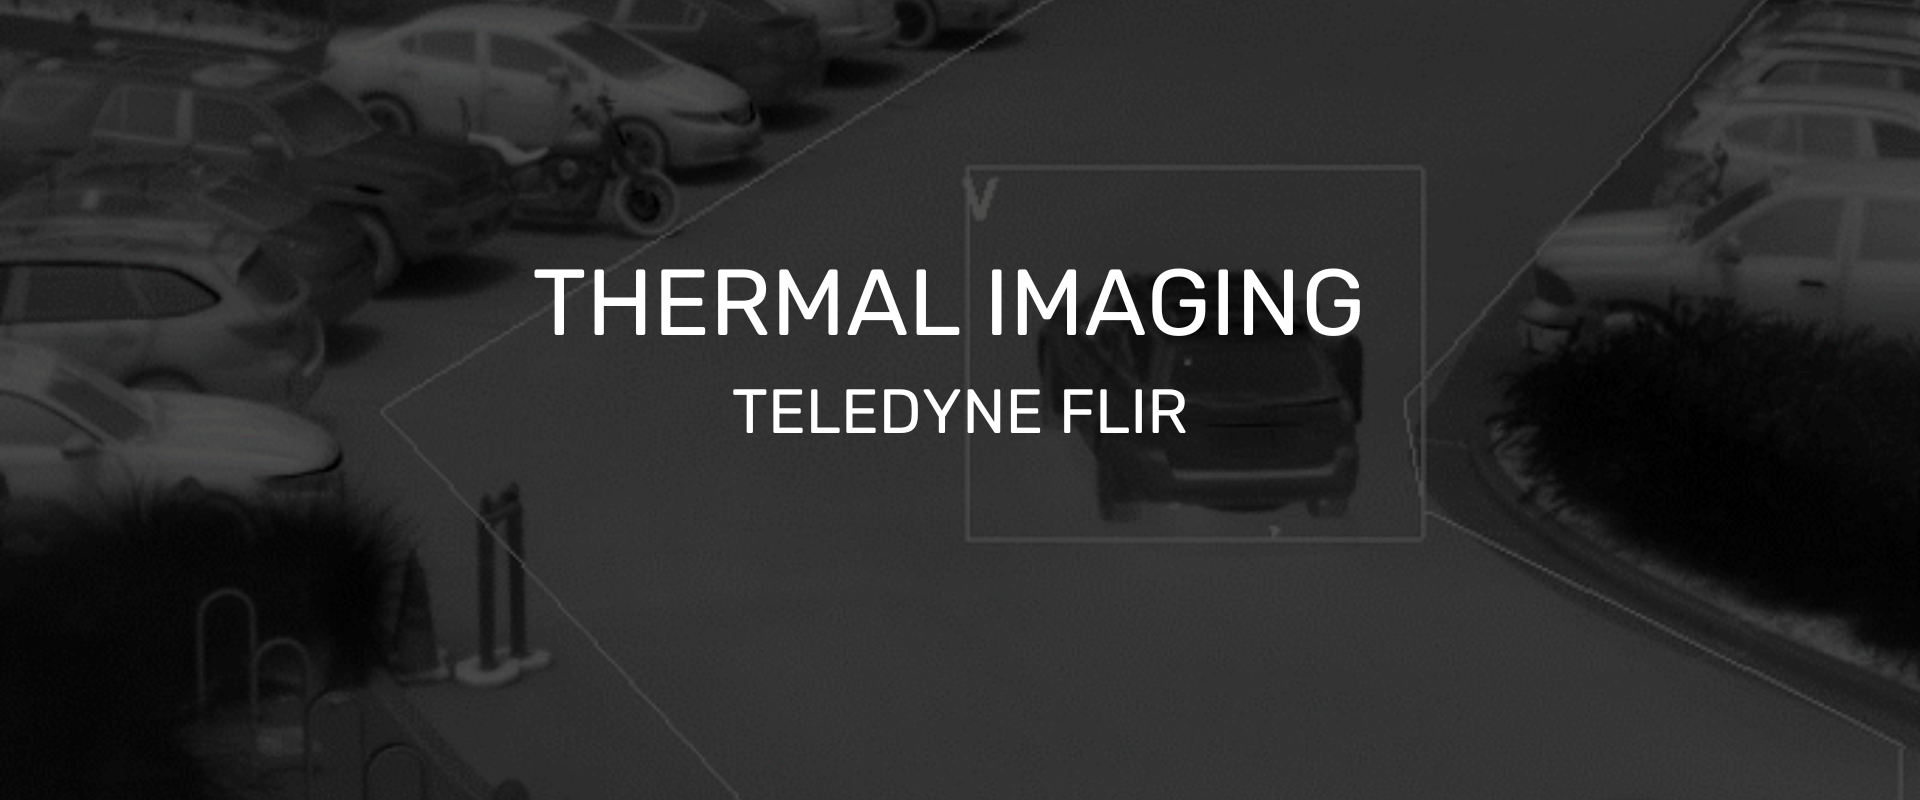 Thermal Imaging CCTVfrom TELEDYNE FLIR